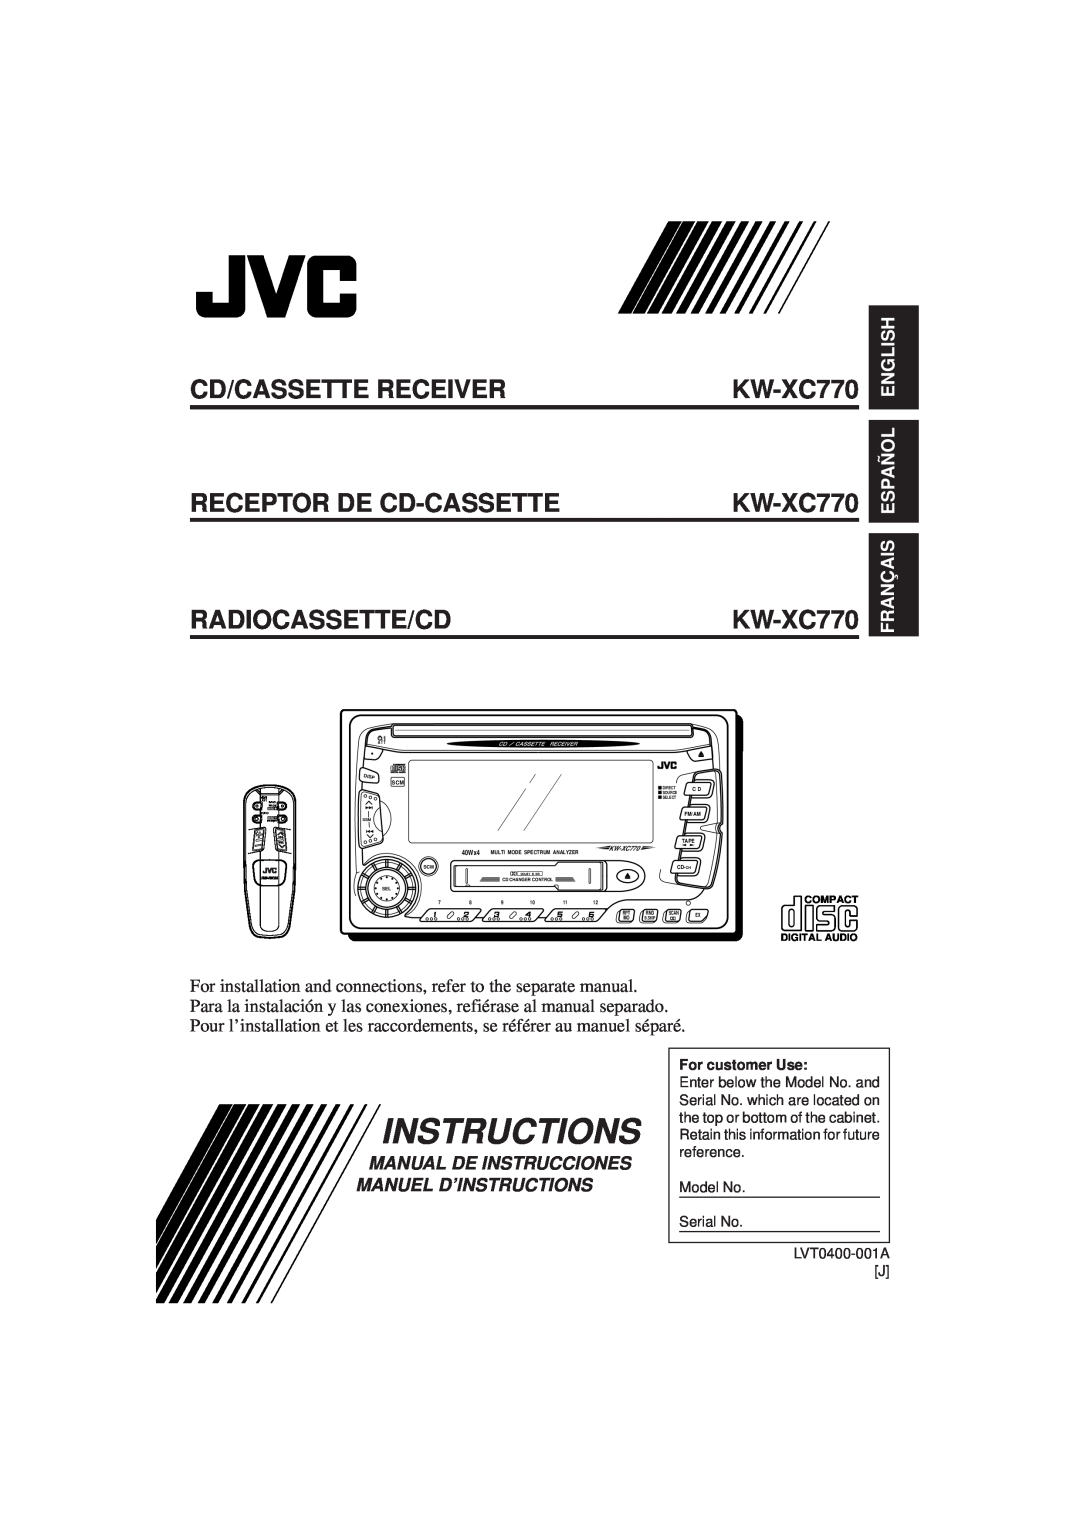 JVC KW-XC770 manual Instructions, Cd/Cassette Receiver Receptor De Cd-Cassette Radiocassette/Cd, Français Español English 